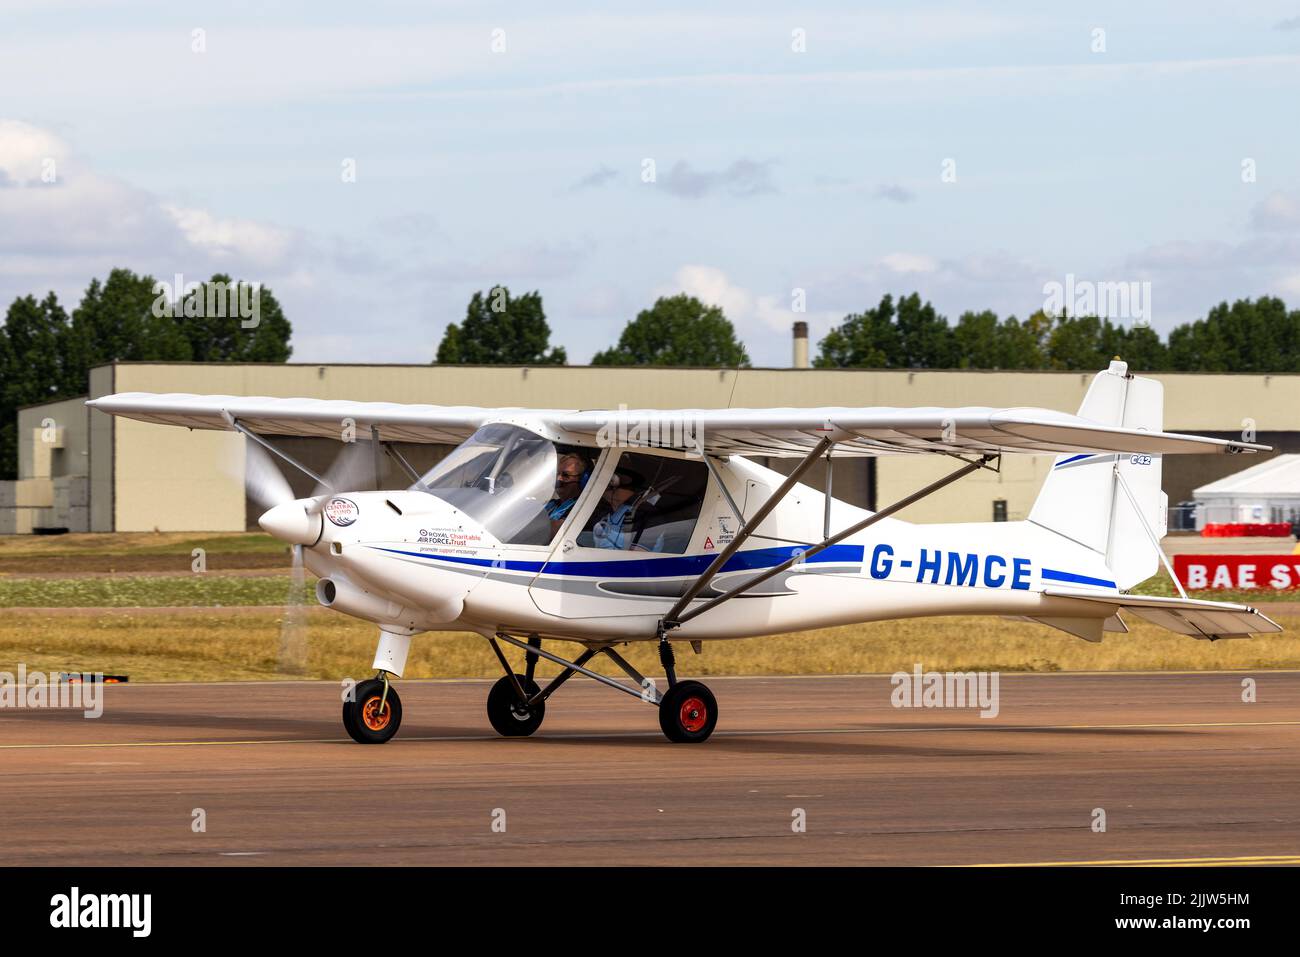 Ikarus C42 a modern 21st century microlight aircraft Stock Photo - Alamy